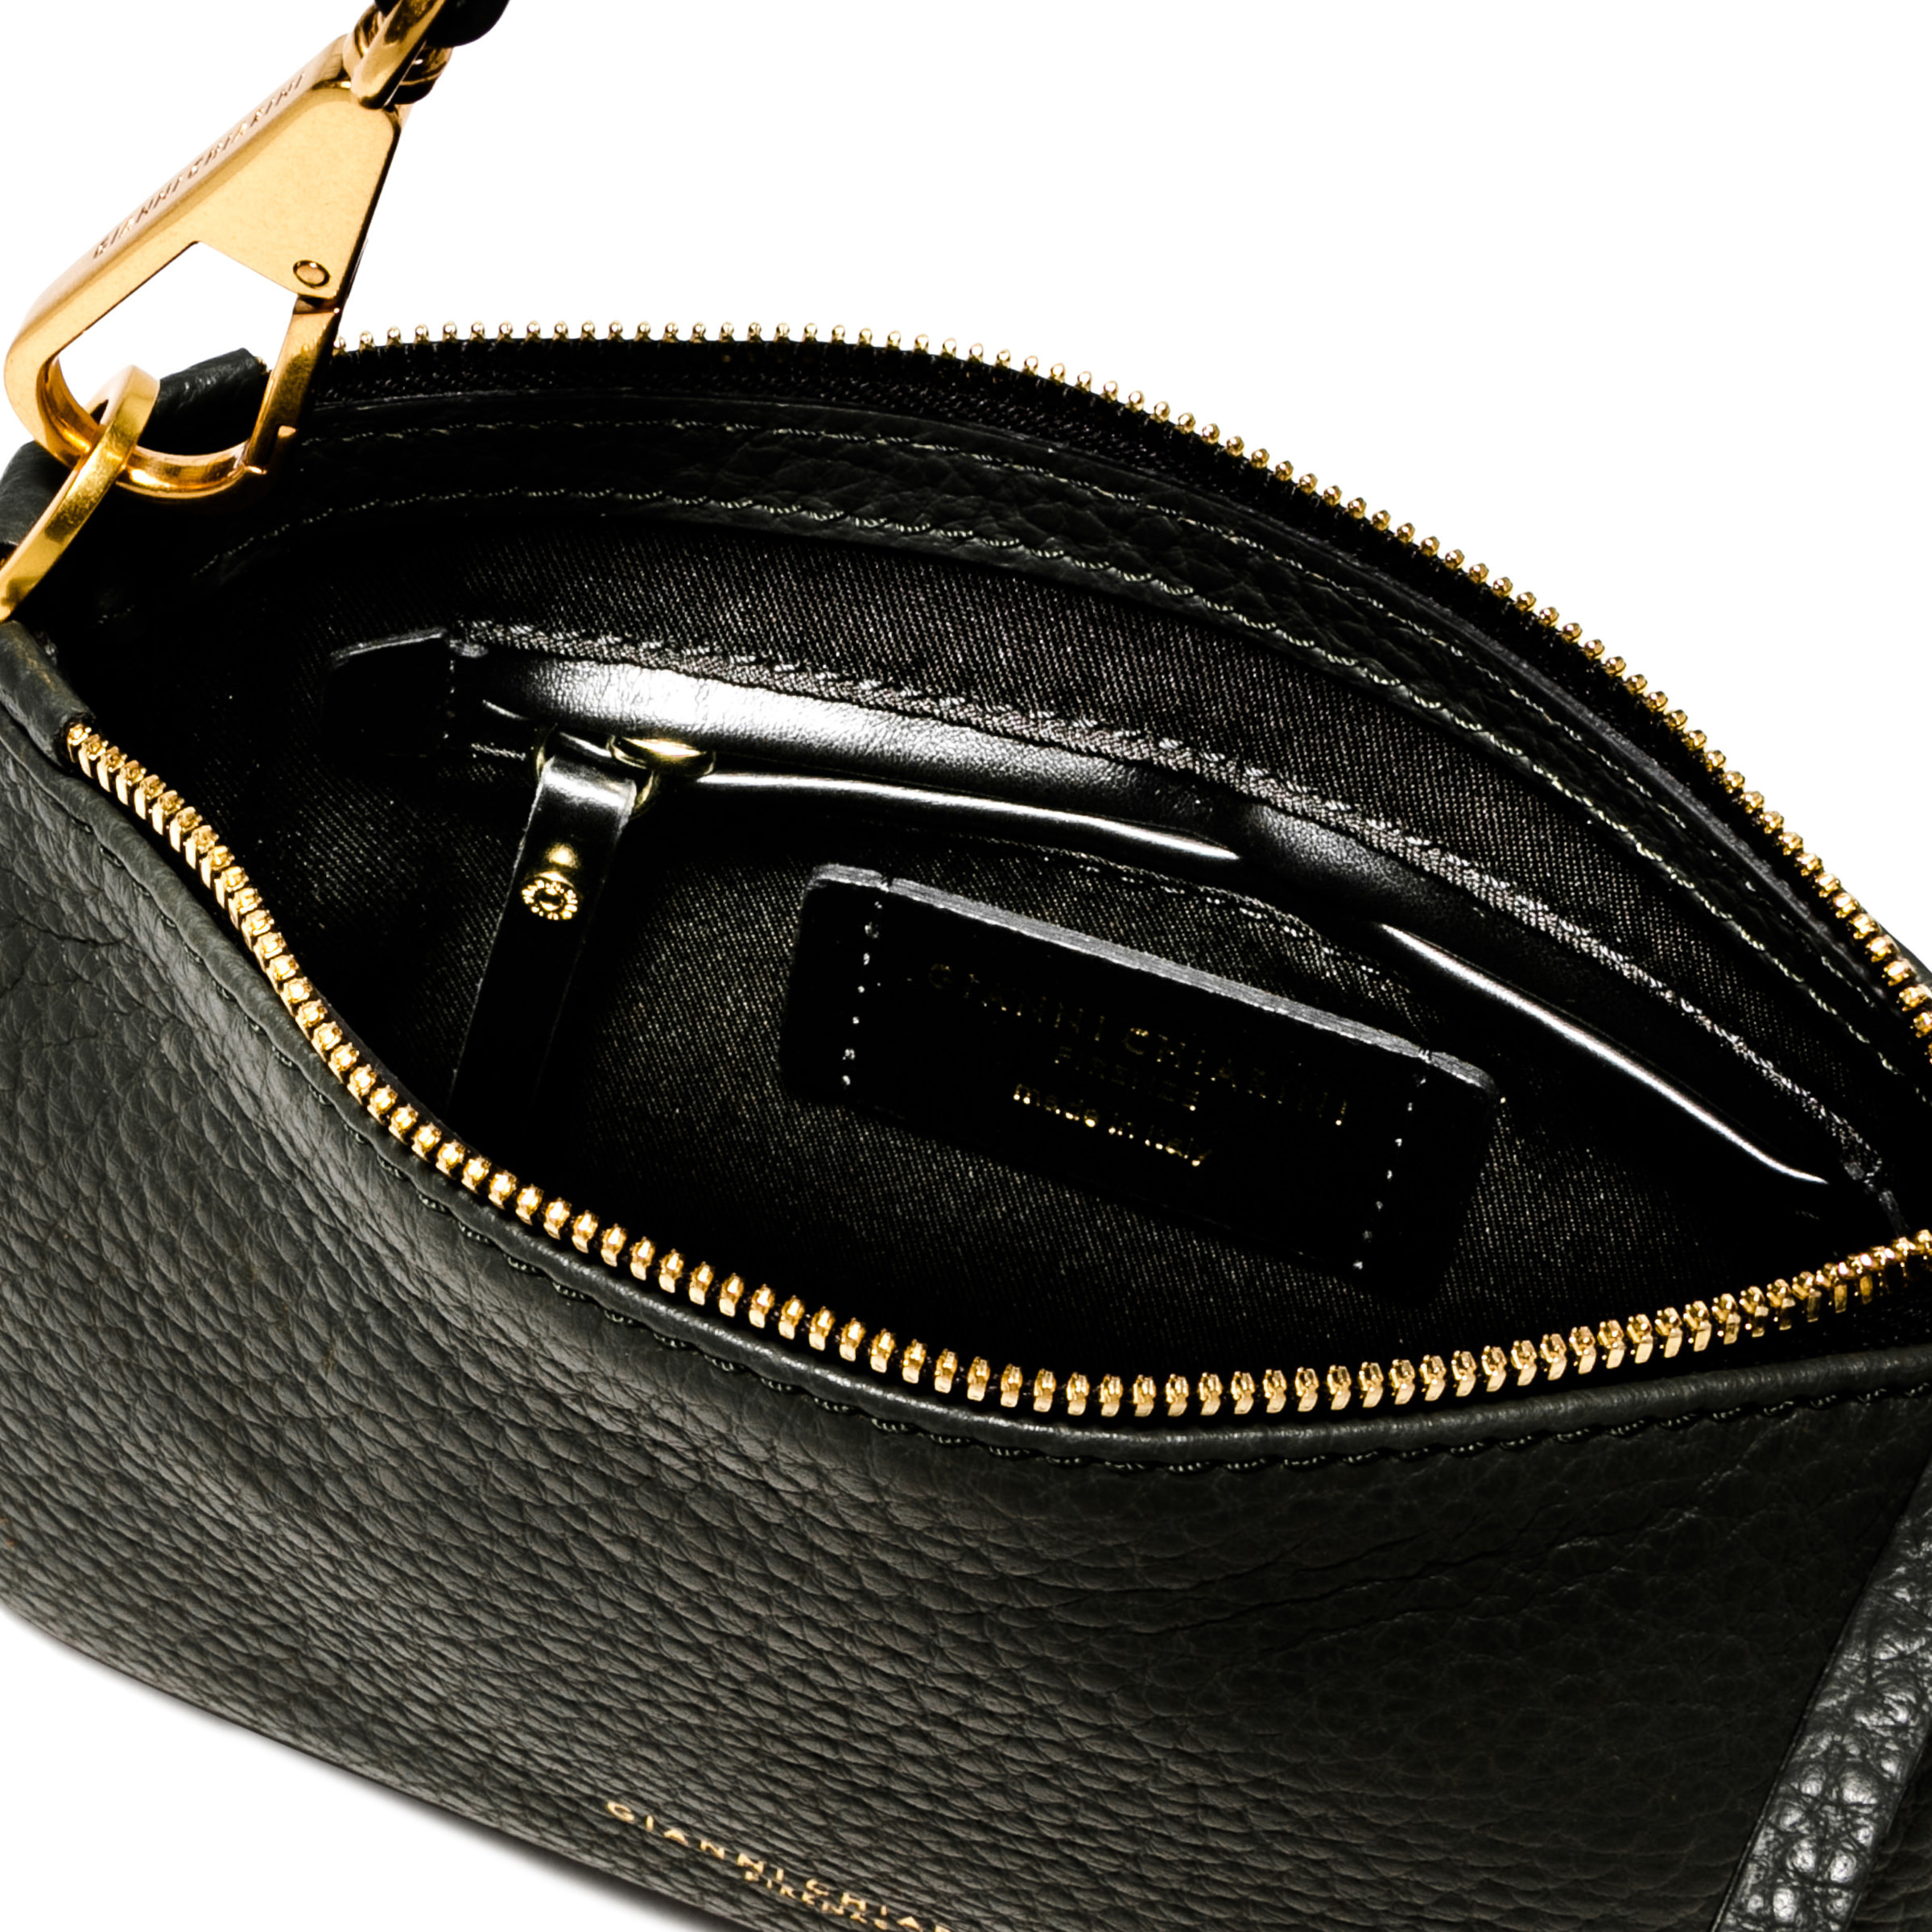 Gianni Chiarini - Brooke bag in leather, Black, large image number 4